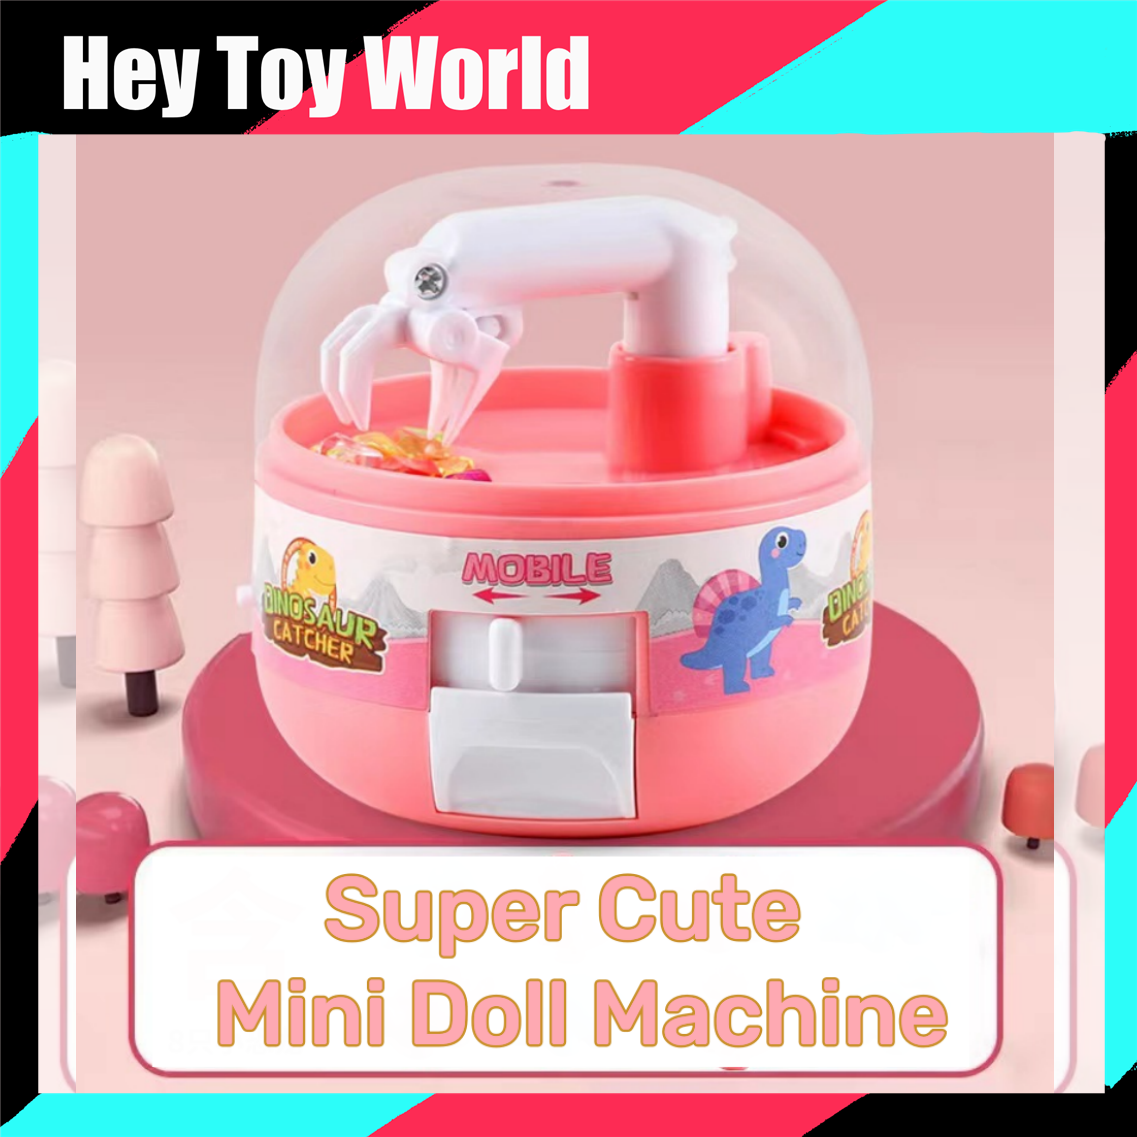 Mini Doll Machine